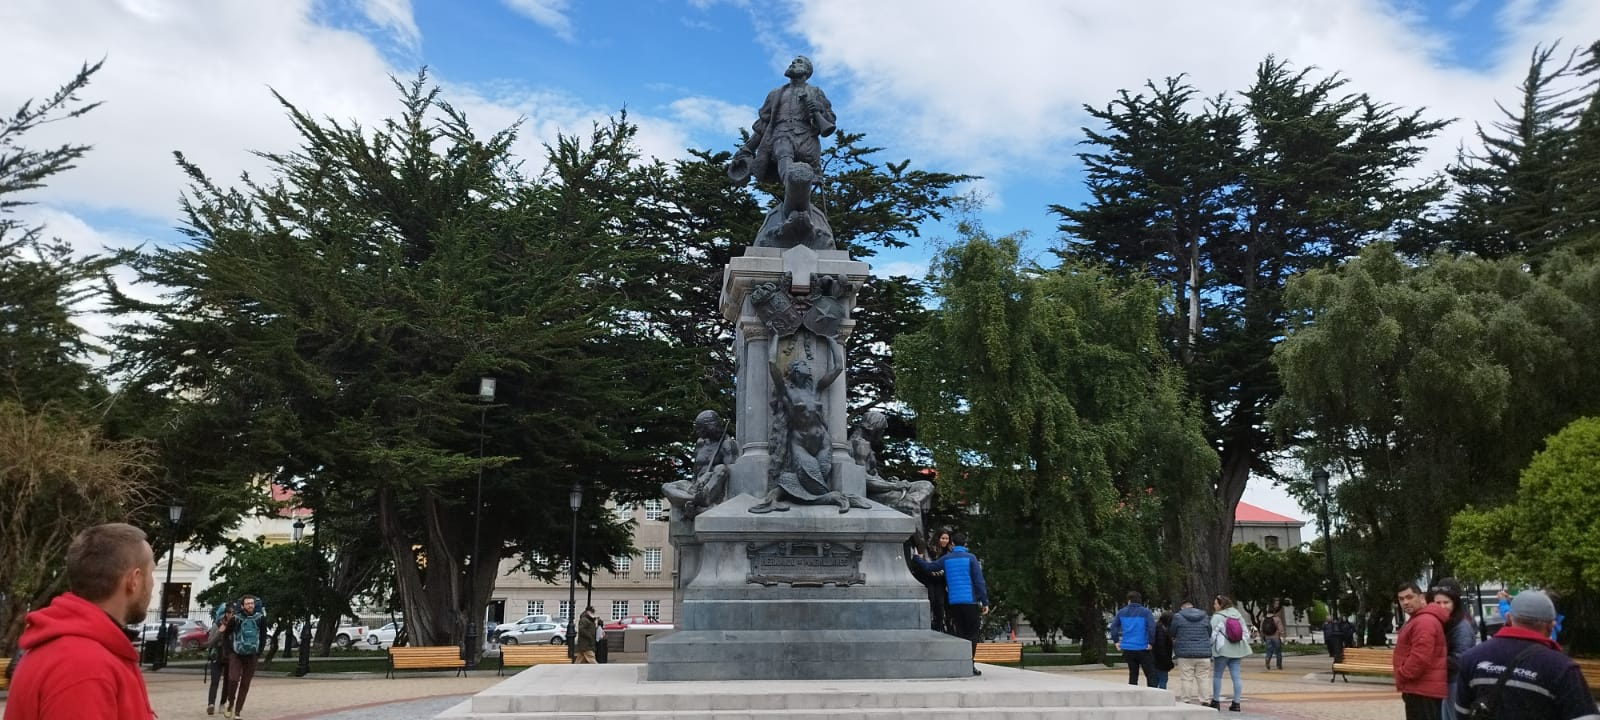 У памятника Магеллану в Пунта-Аренасе. Фото участников экспедиции